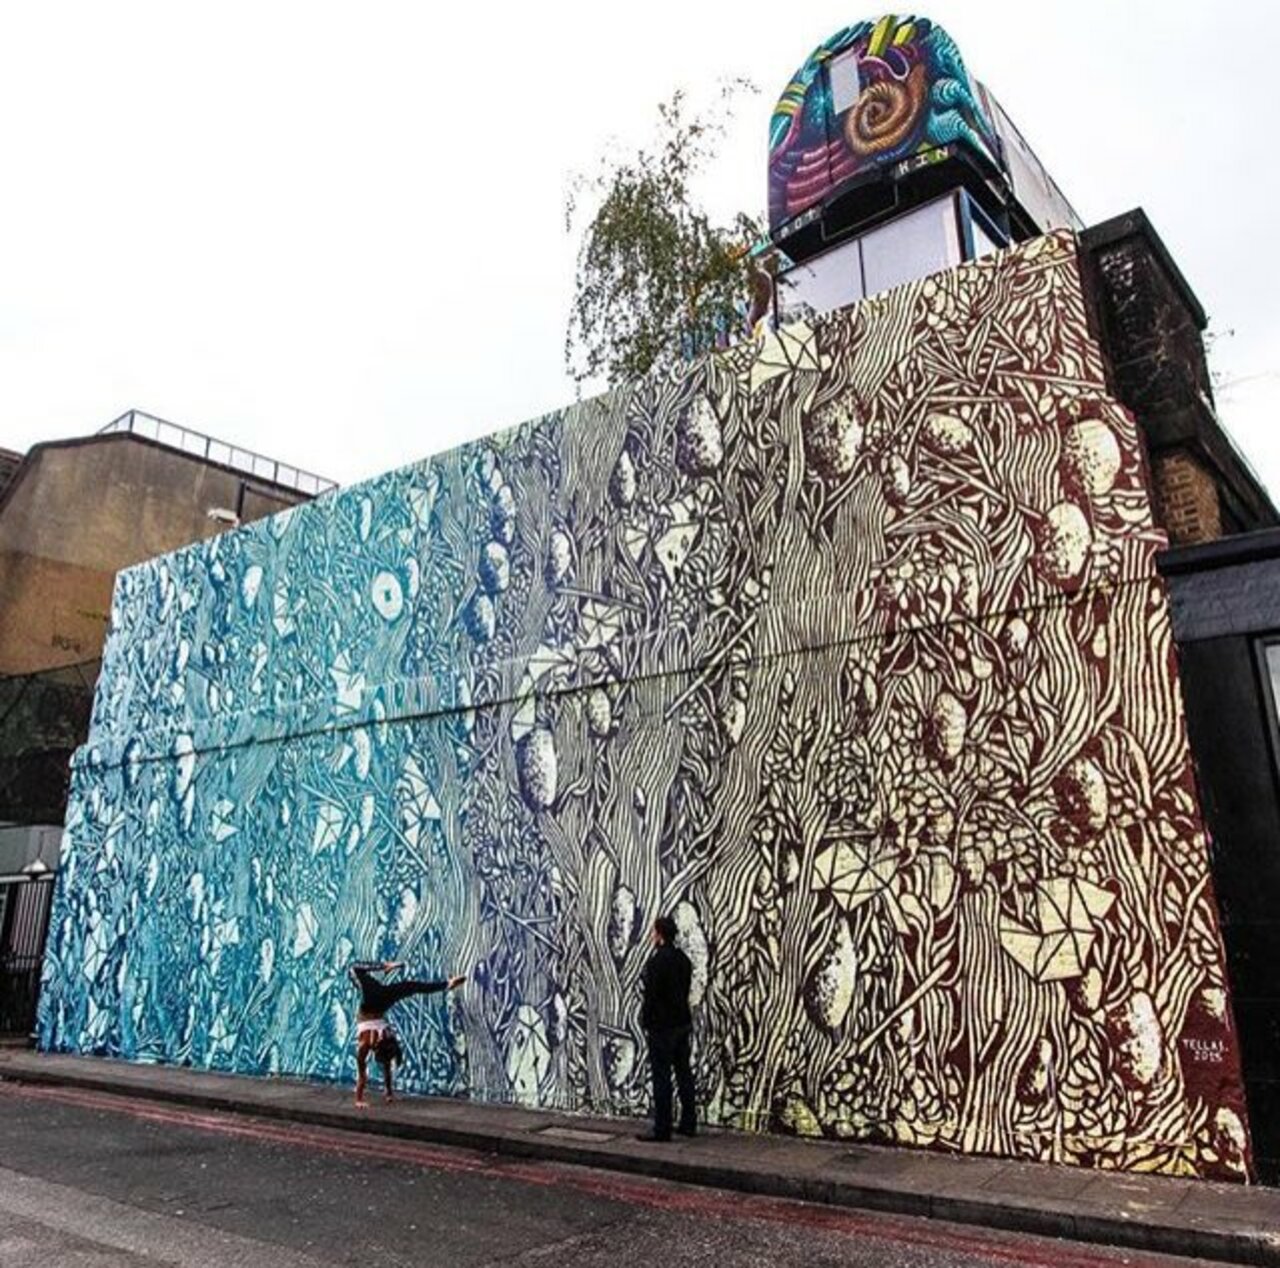 New Street Art by Tellas in Shoreditch London 

#art #graffiti #mural #streetart https://t.co/g7xunqYXma